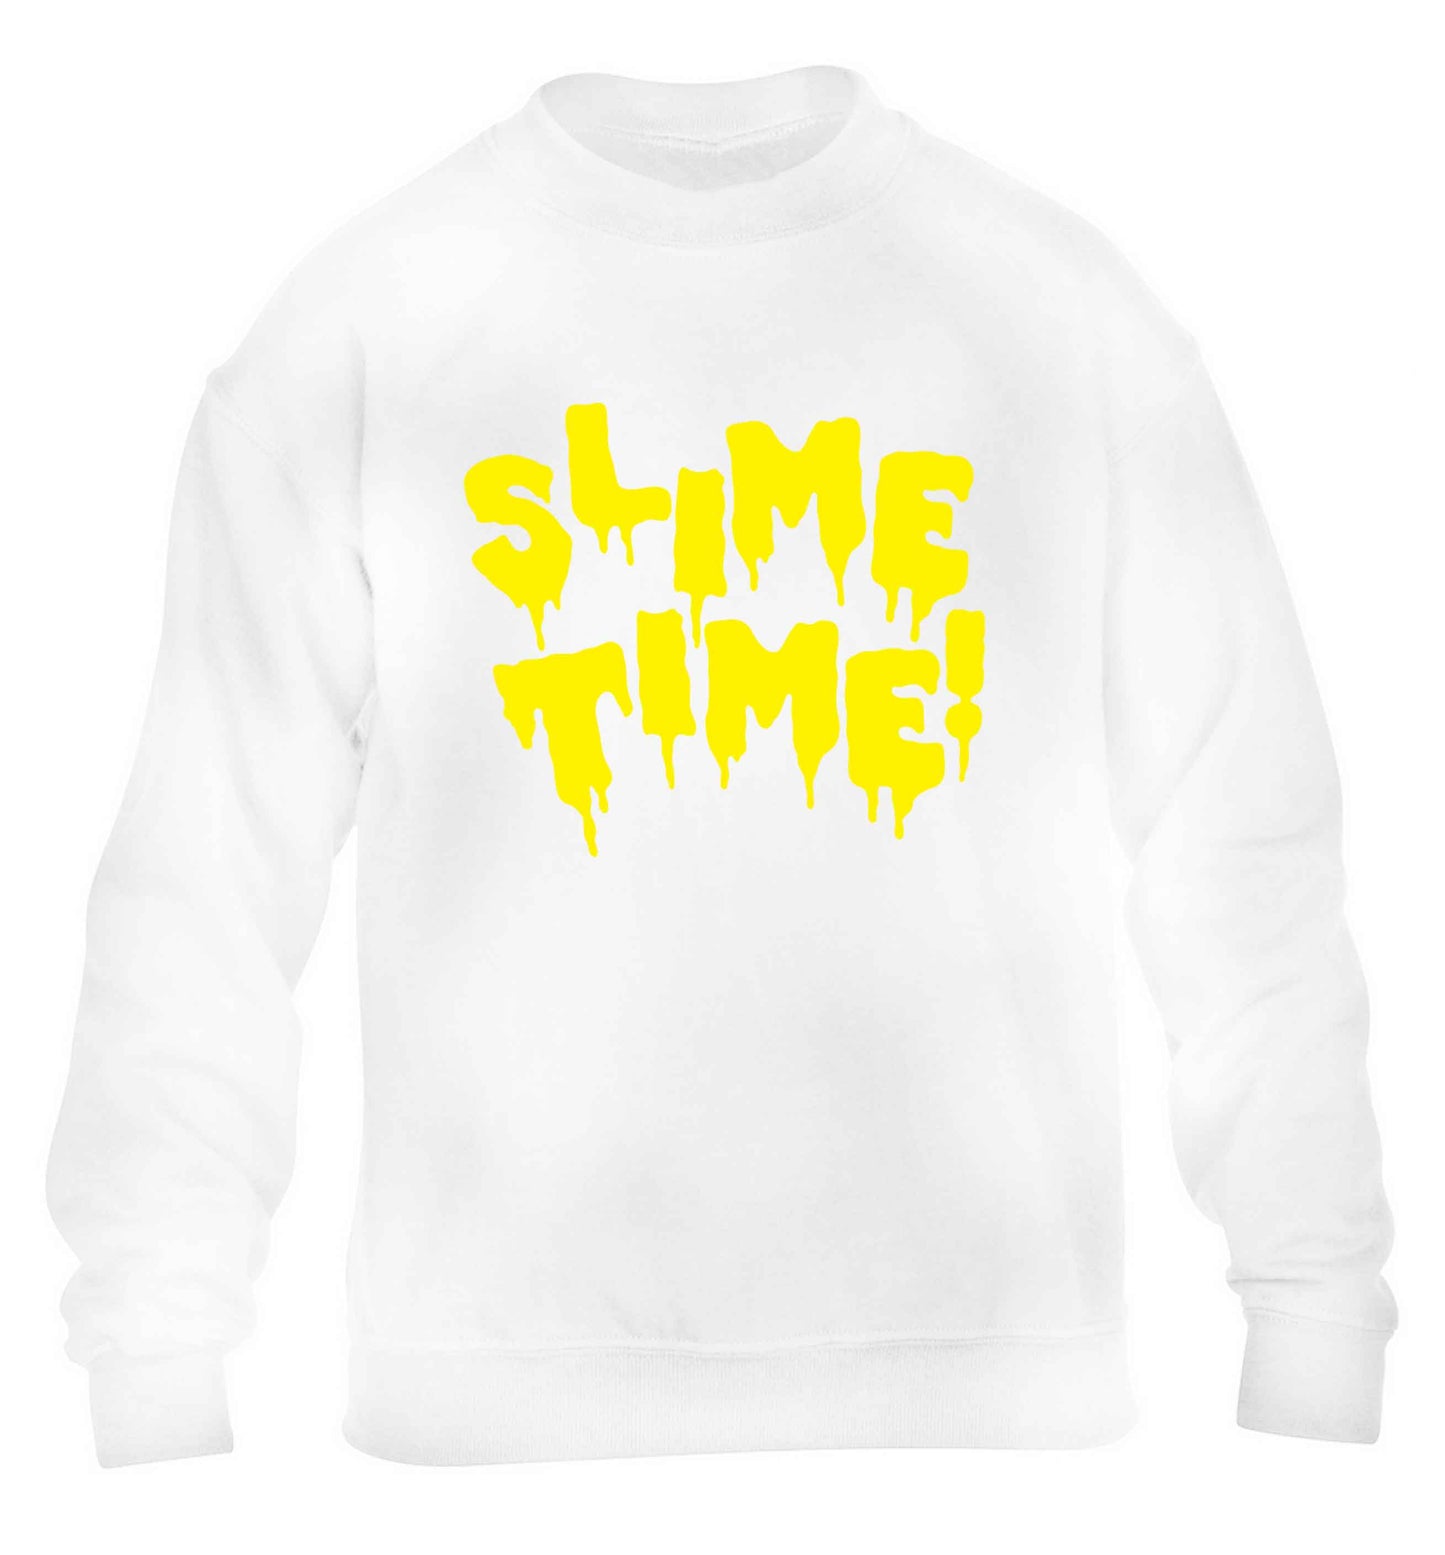 Neon yellow slime time children's white sweater 12-13 Years